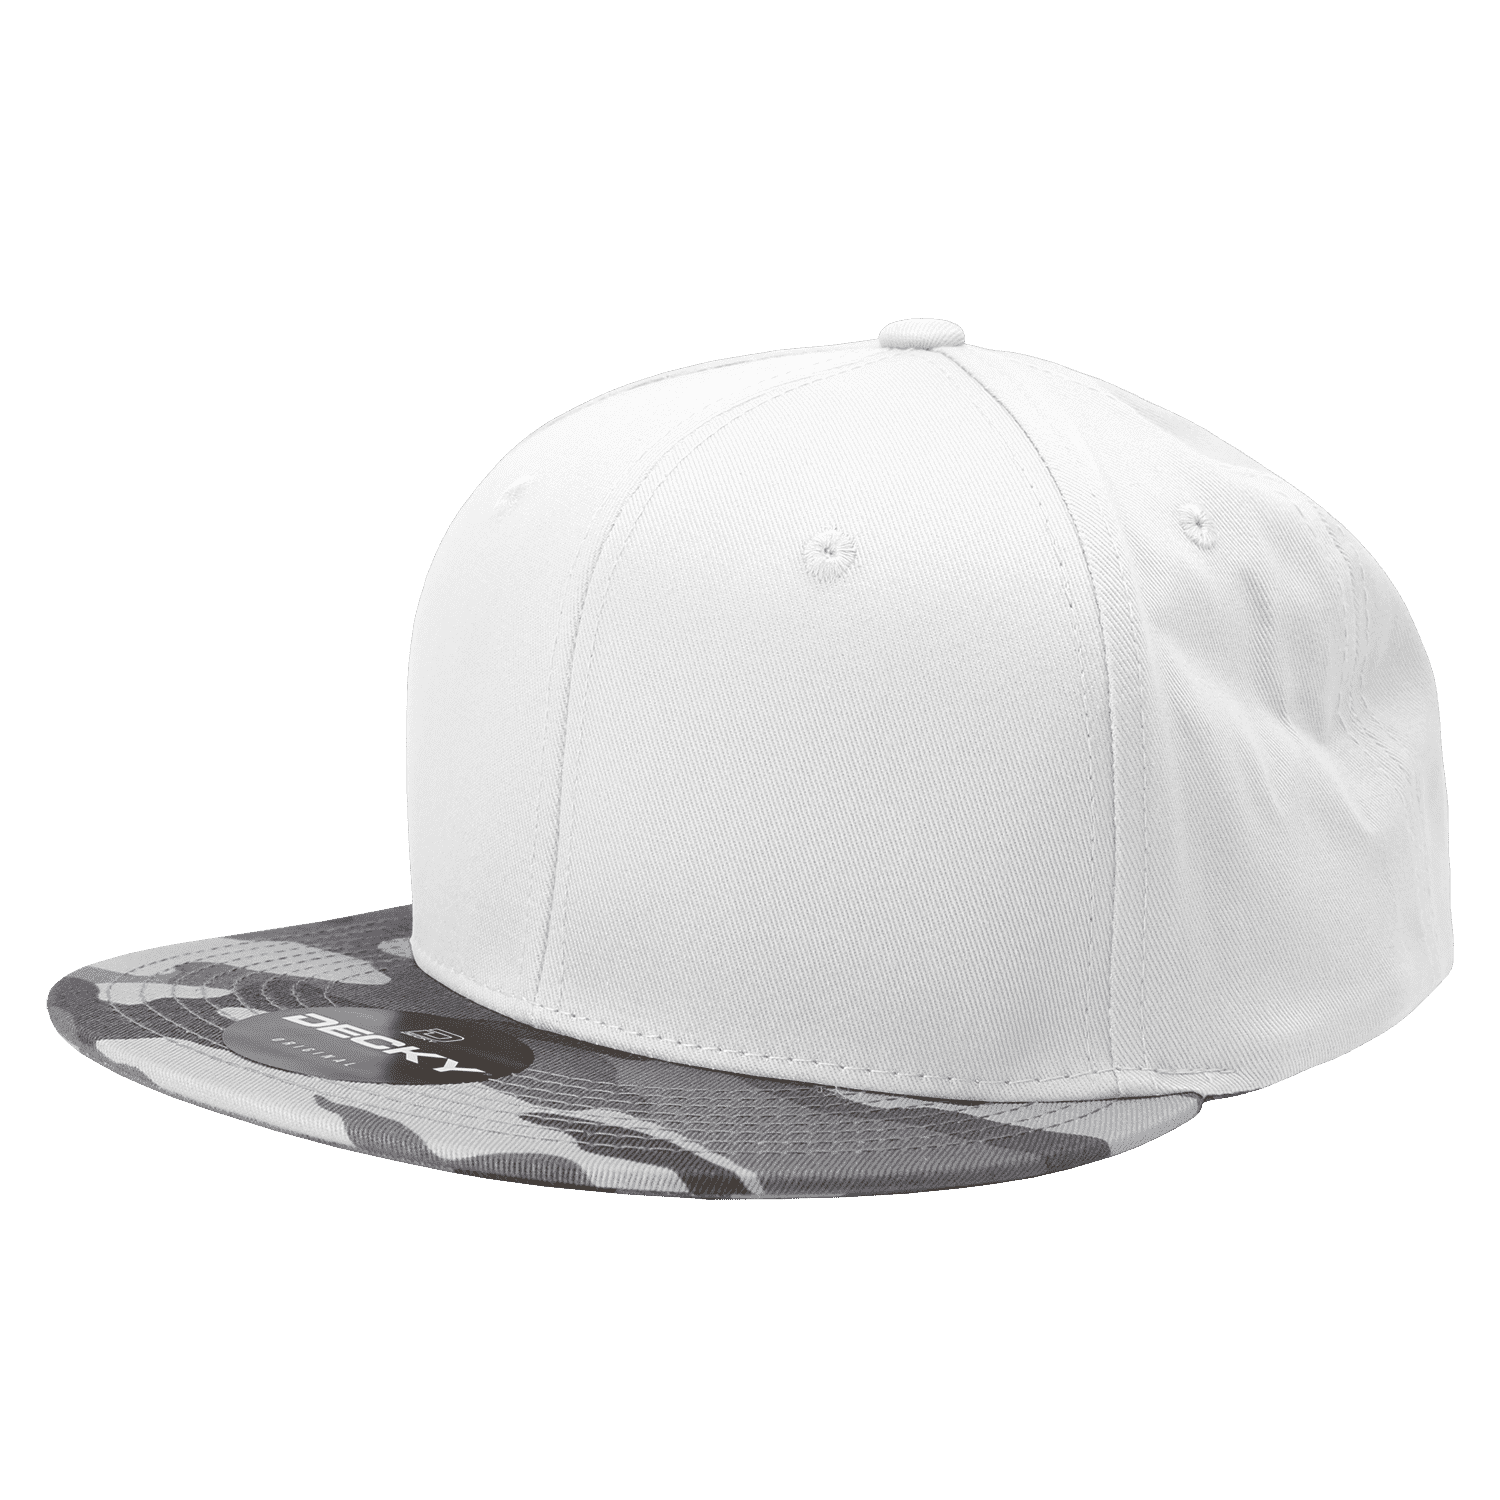 Decky 1047 Digital Camo Snapback Cap - Urban Camo White - HIT a Double - 1